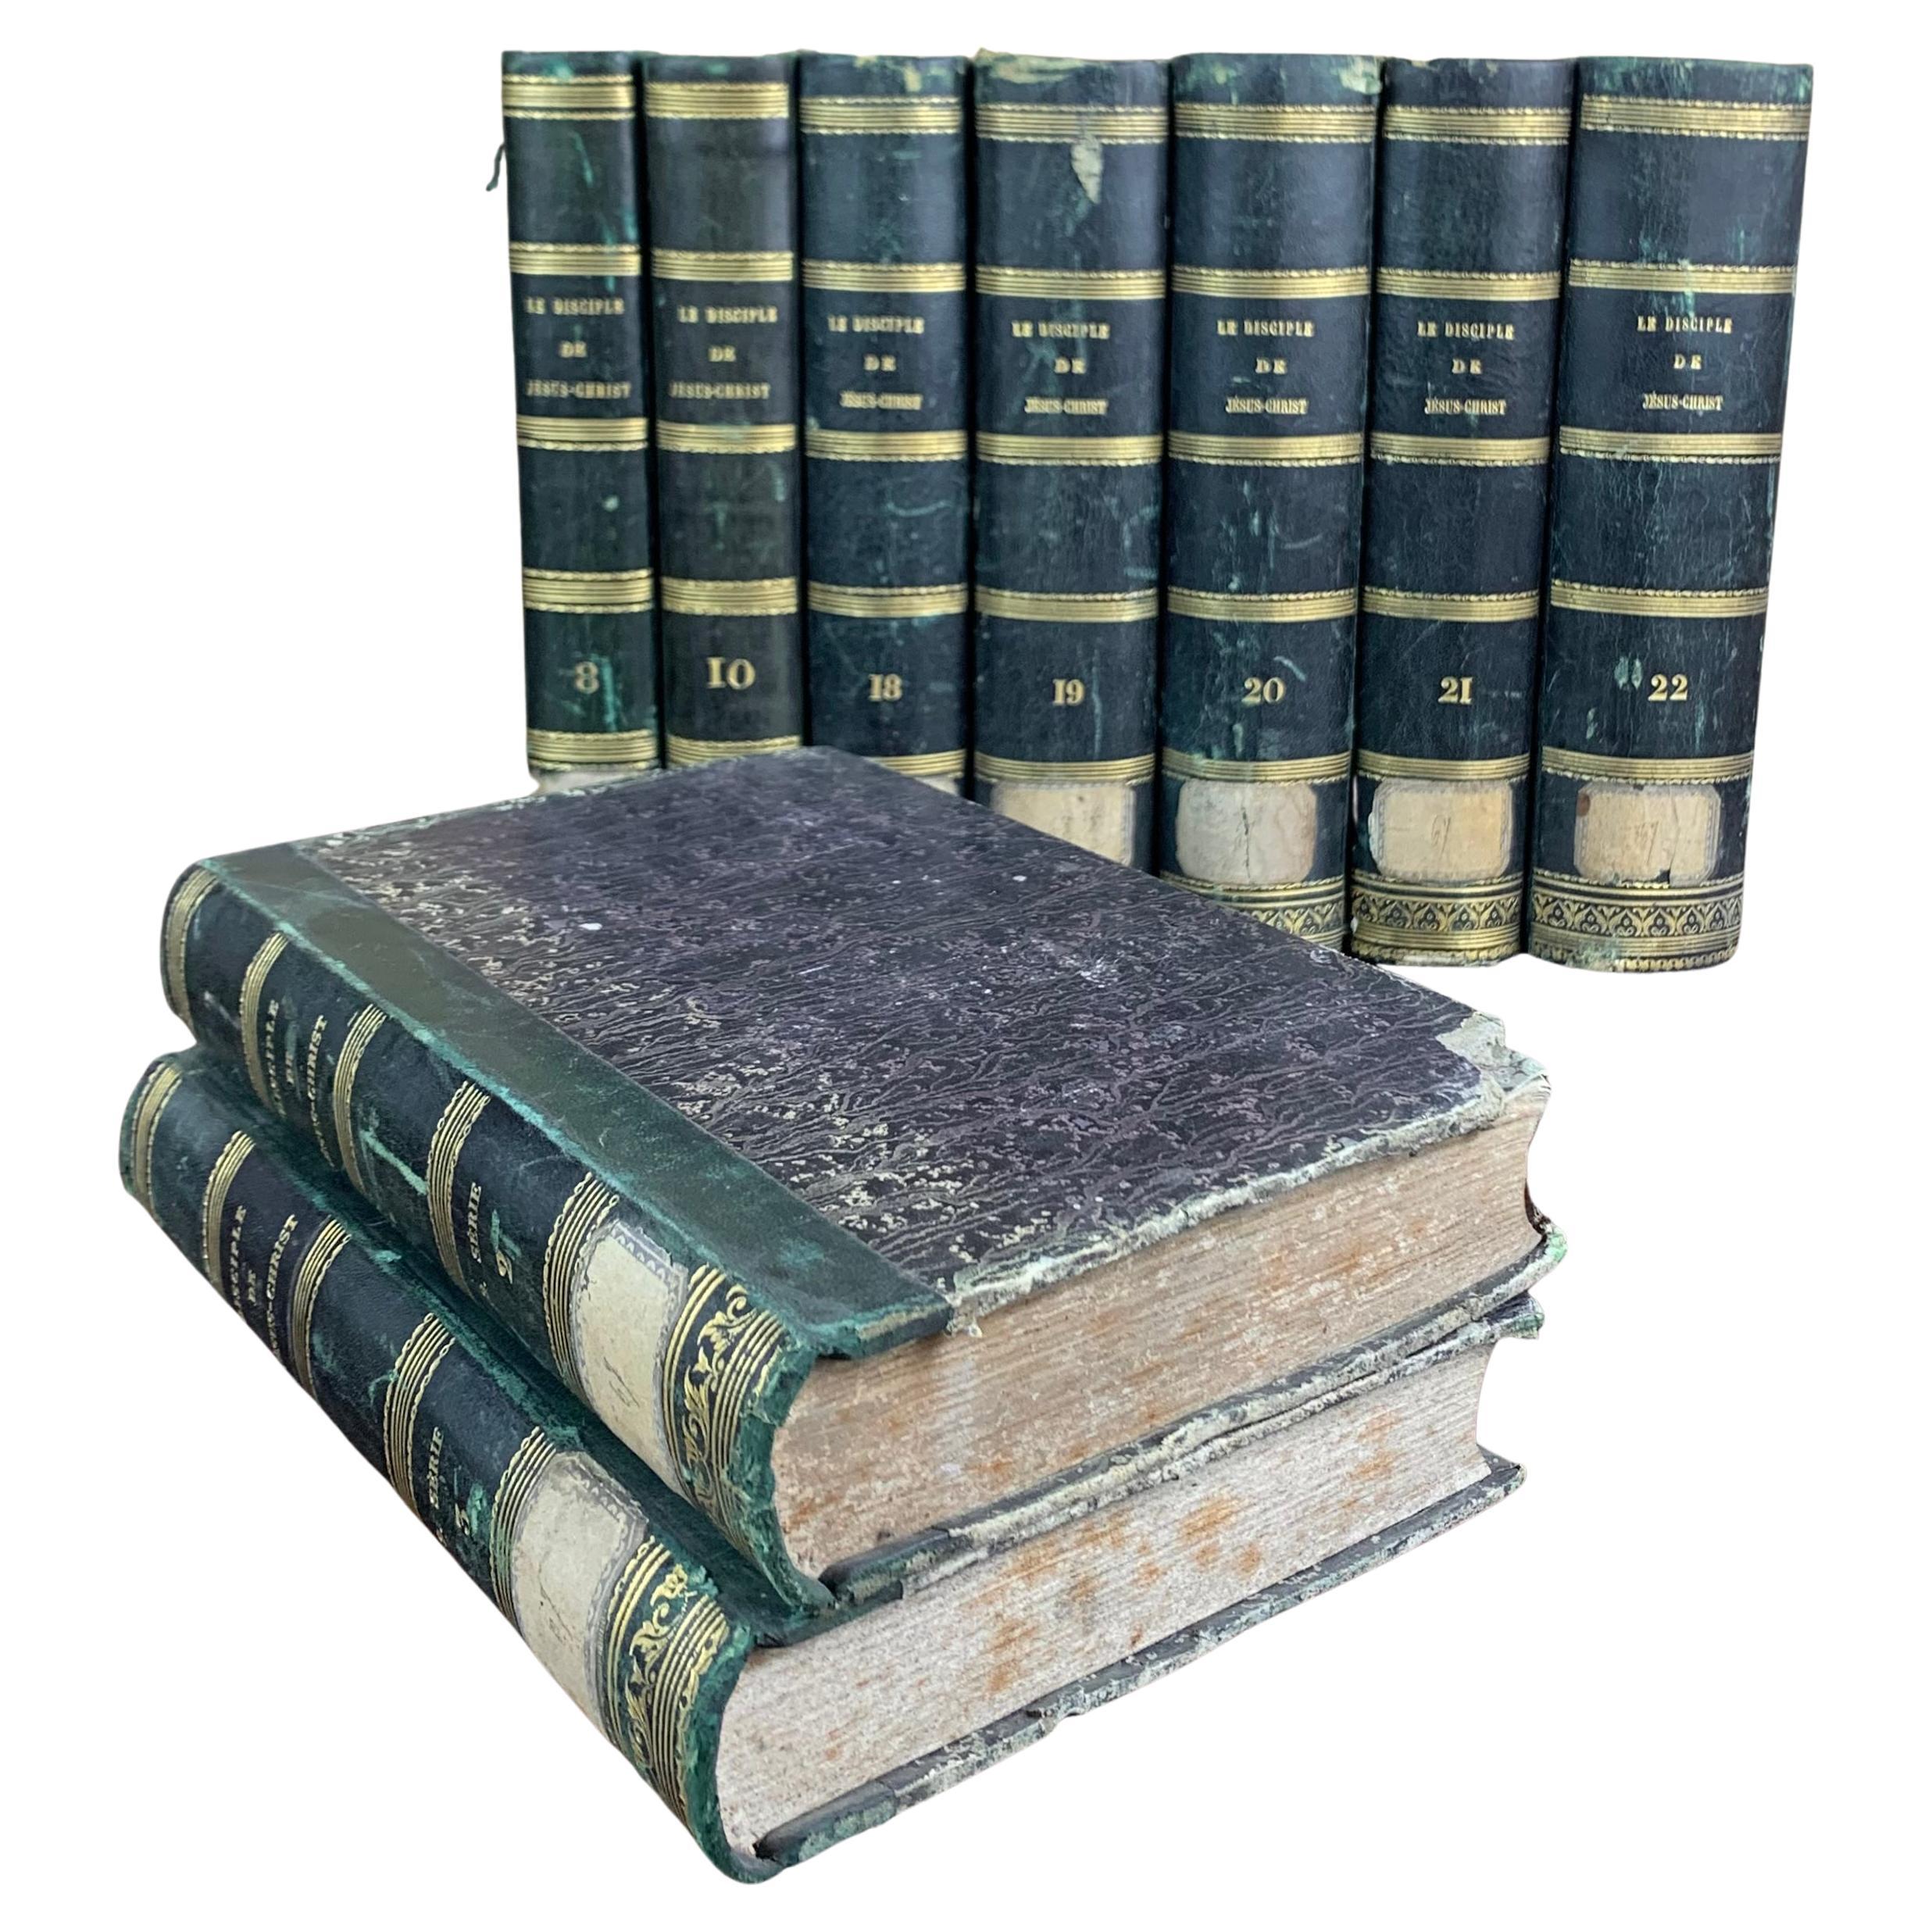 Set of Old Bound Books 19th Century